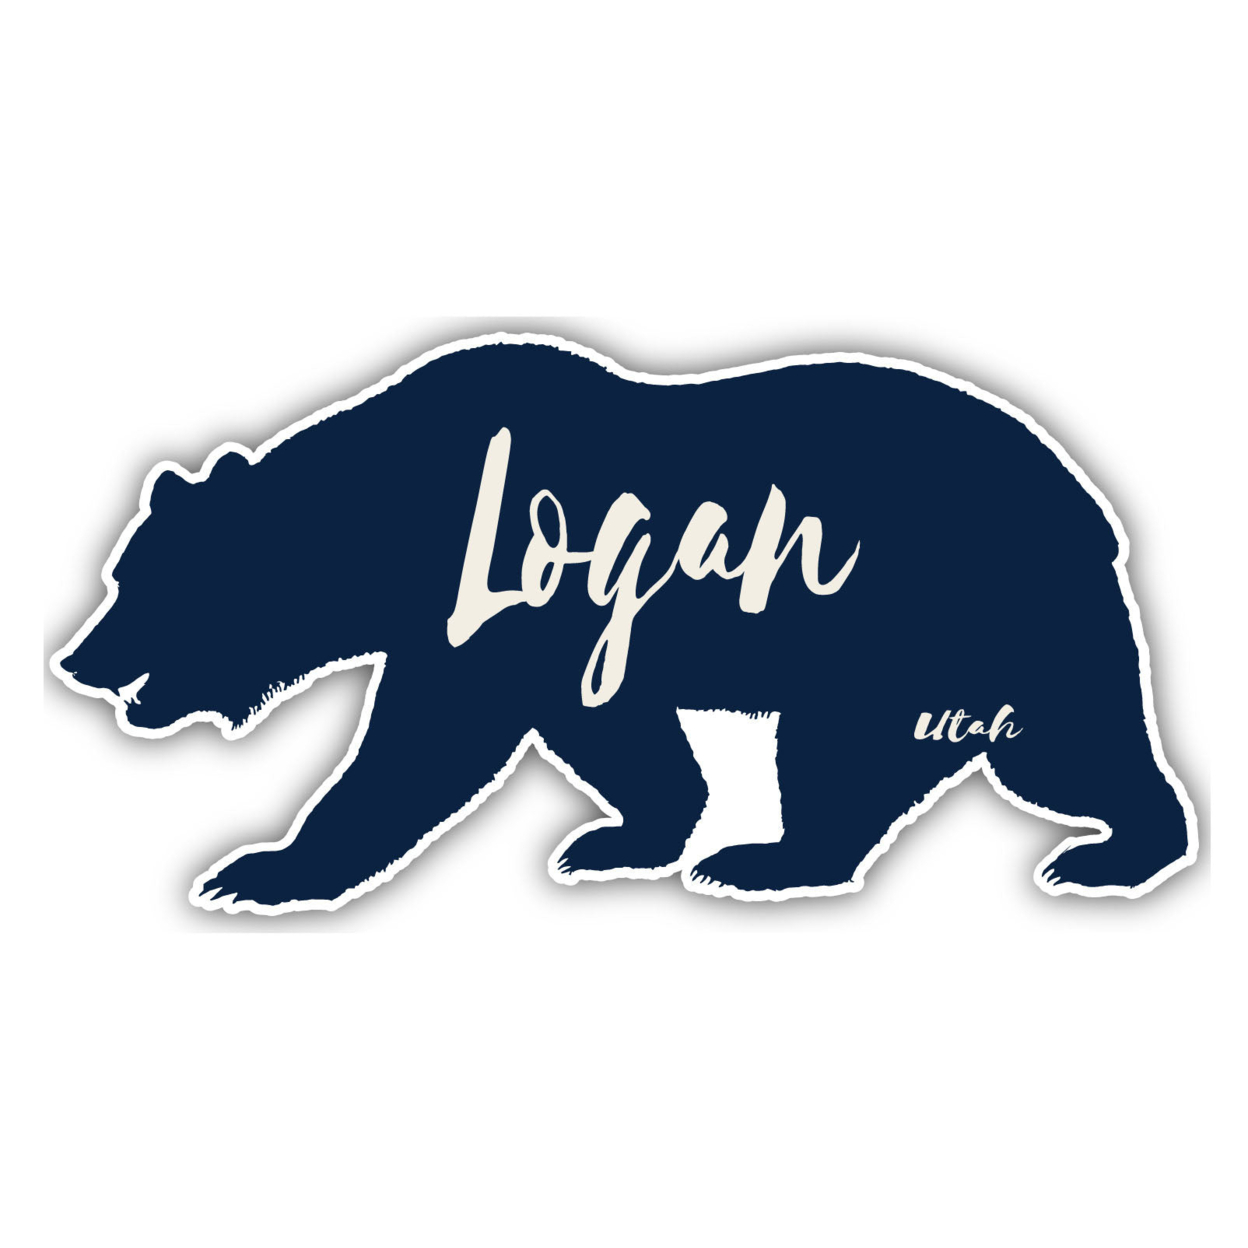 Logan Utah Souvenir Decorative Stickers (Choose Theme And Size) - 4-Inch, Adventures Awaits